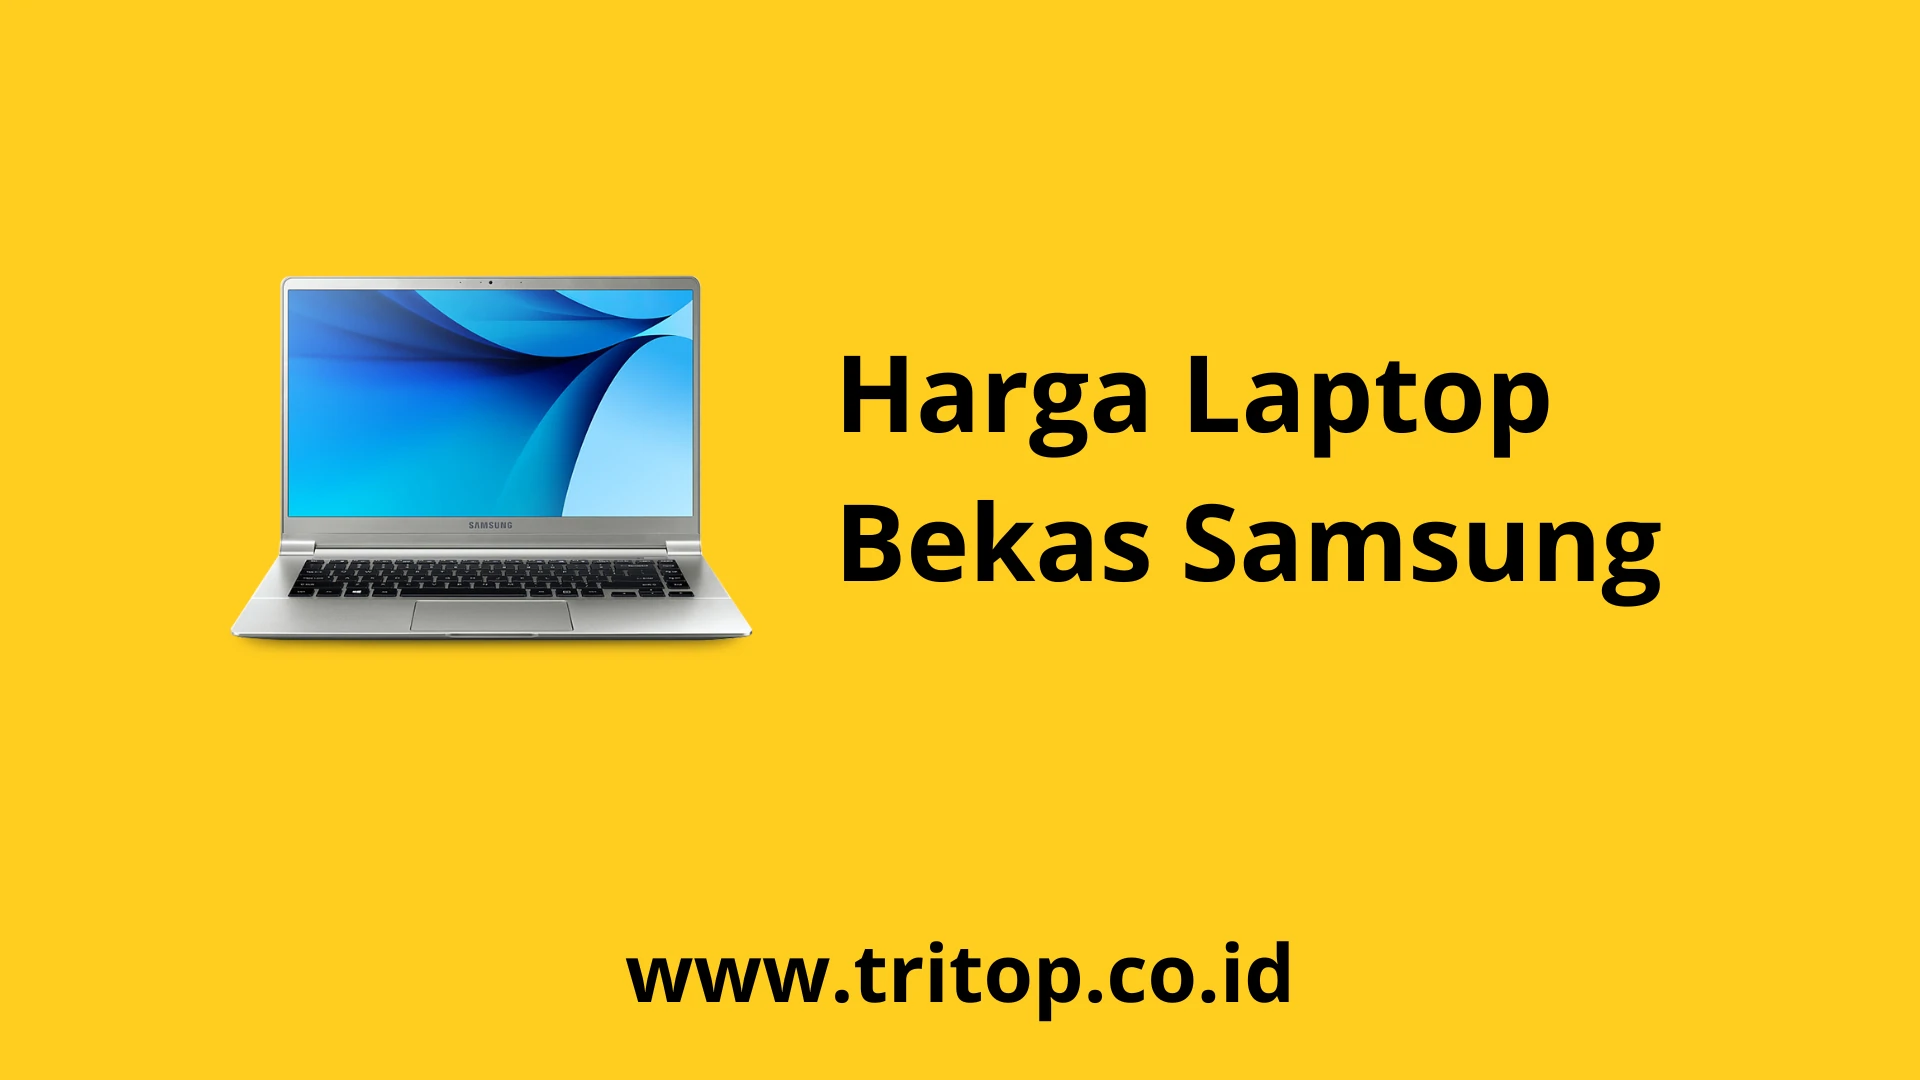 Harga Laptop Bekas Samsung Tritop.co.id